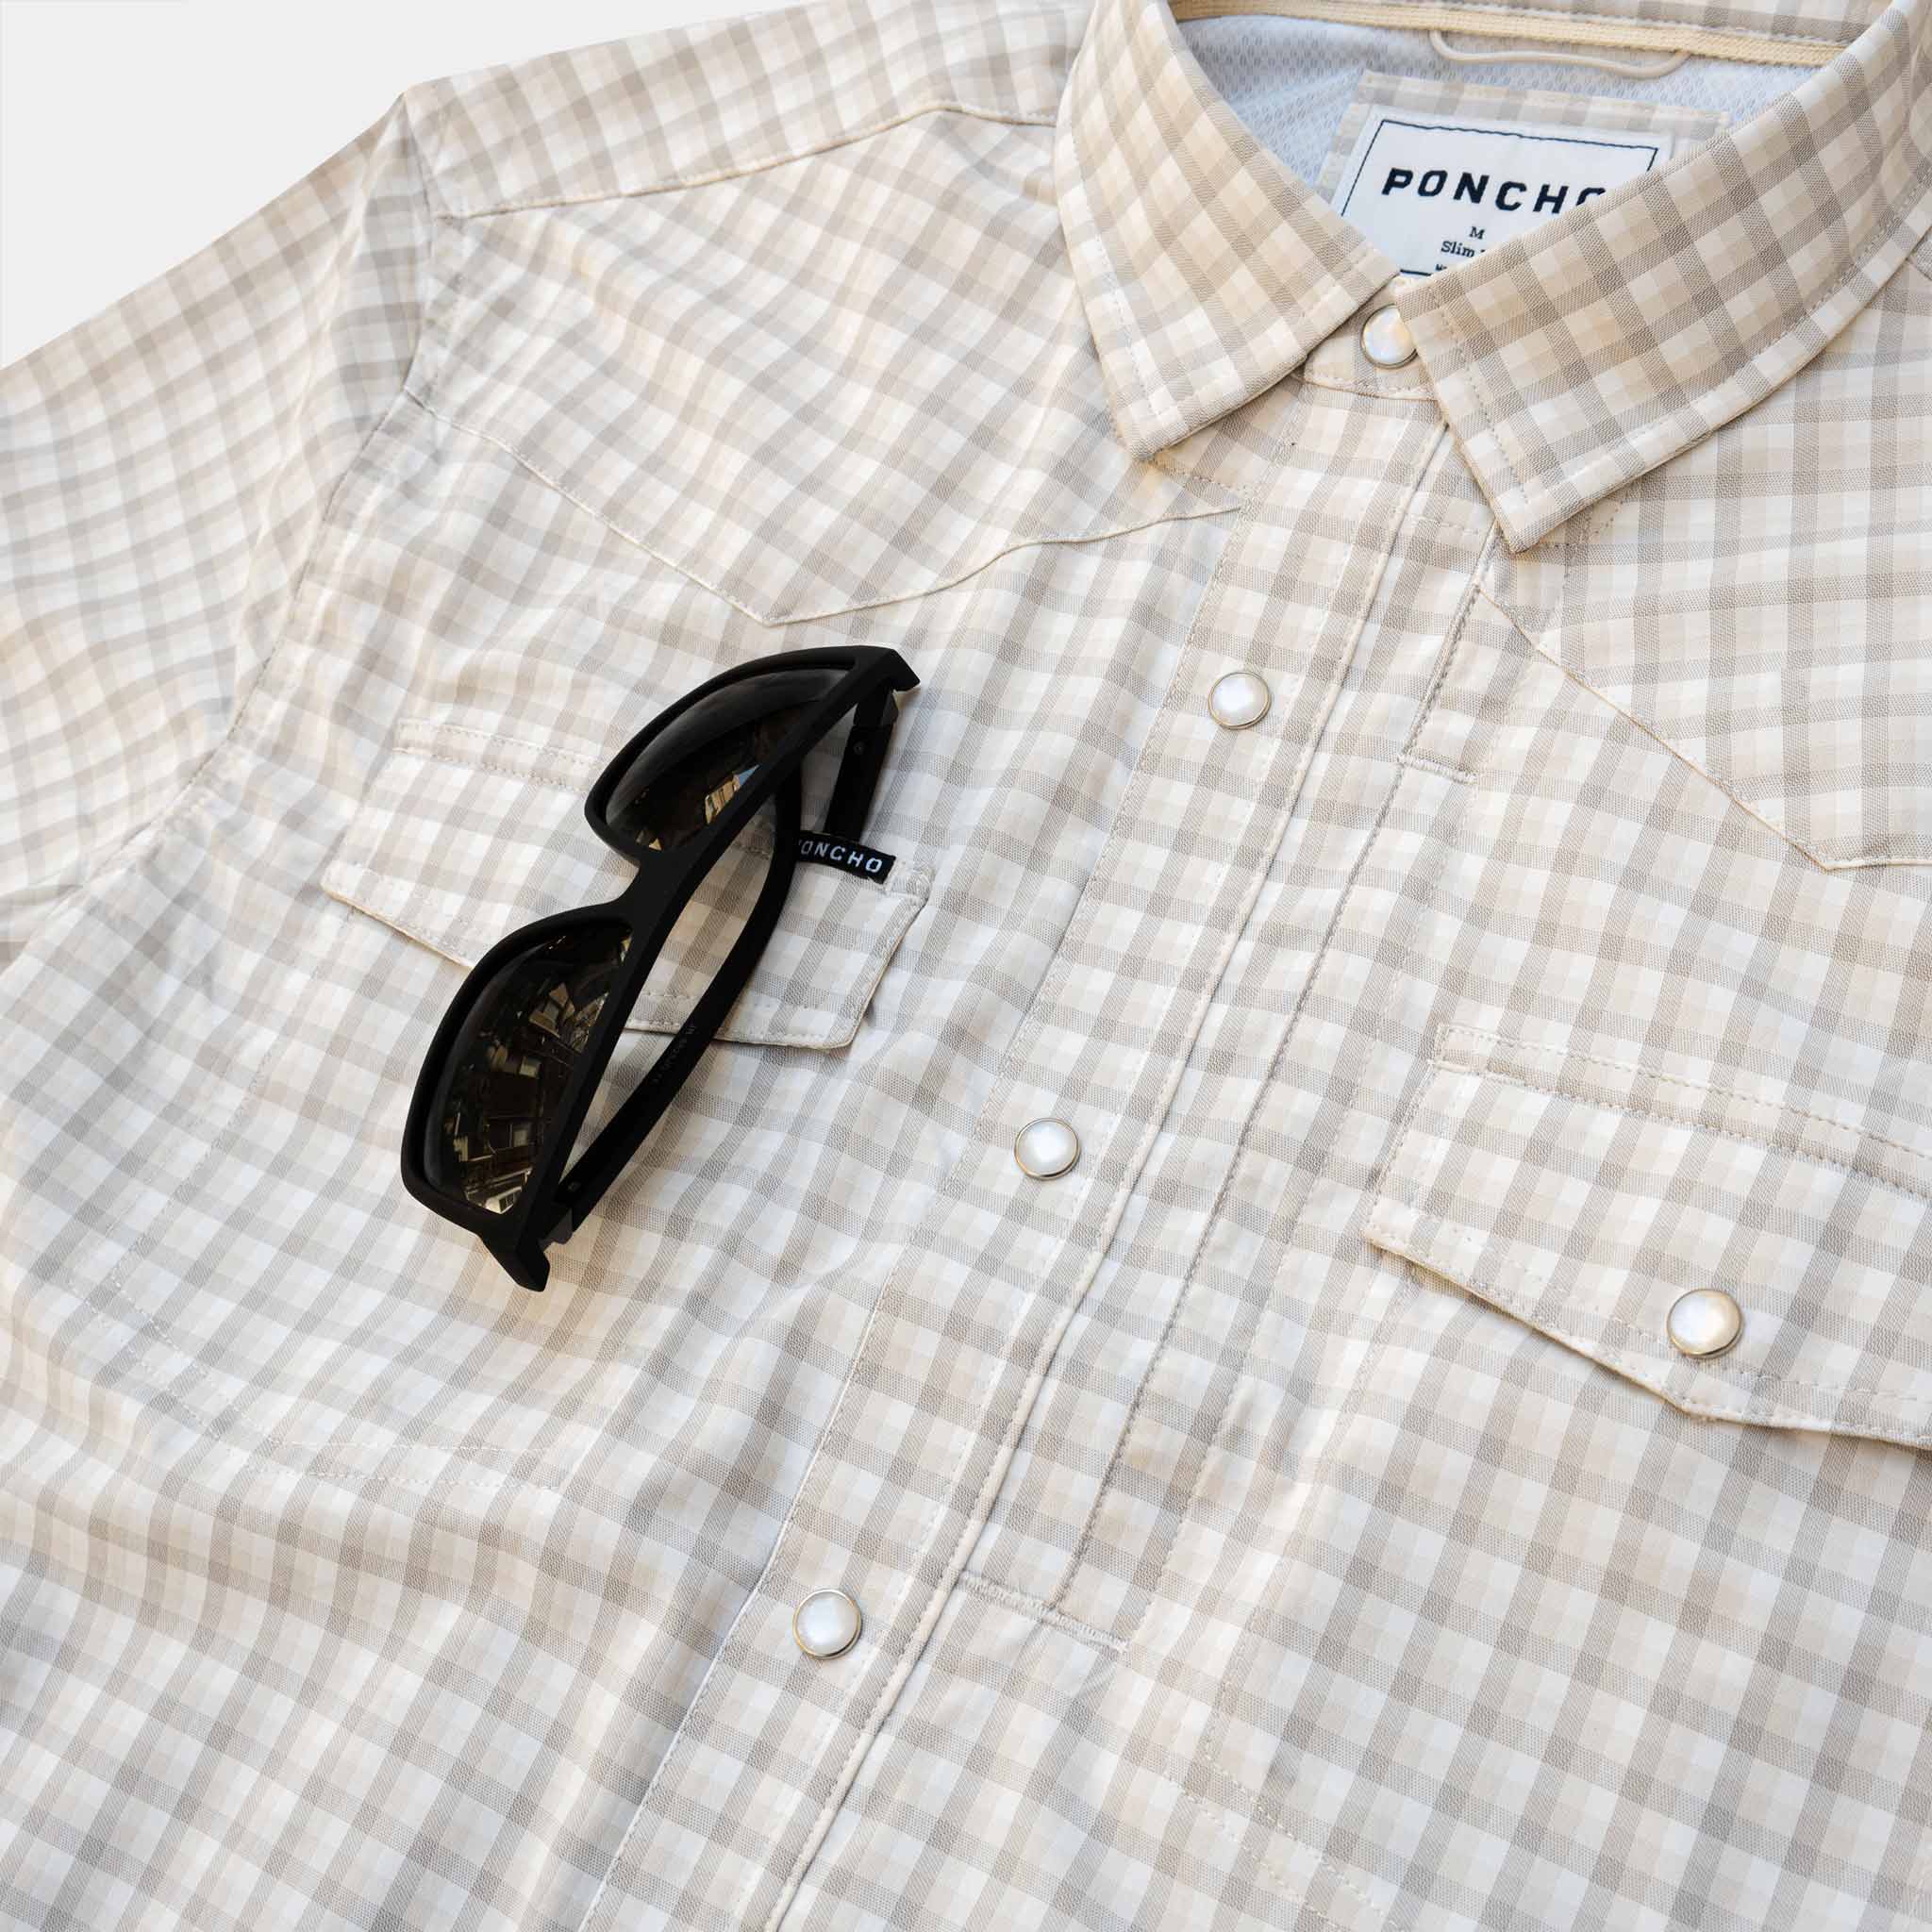 closeup of shades on shirt slit